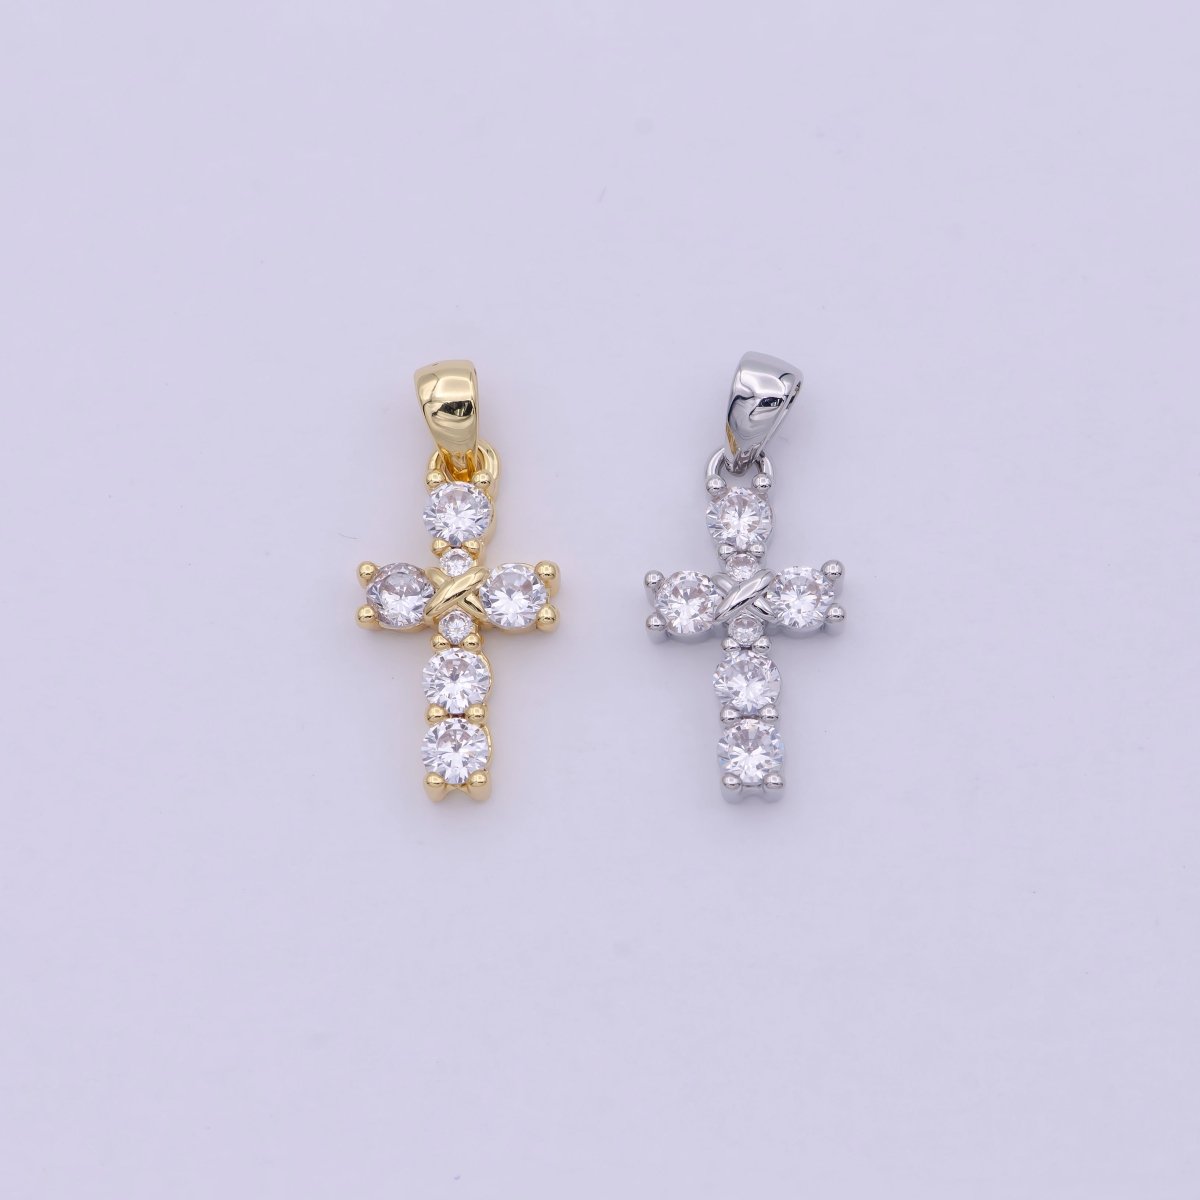 Mini Cross Charm Gold Filled Cross Pendant Add on Charm for Bracelet Necklace Earring H-104 H-106 - DLUXCA